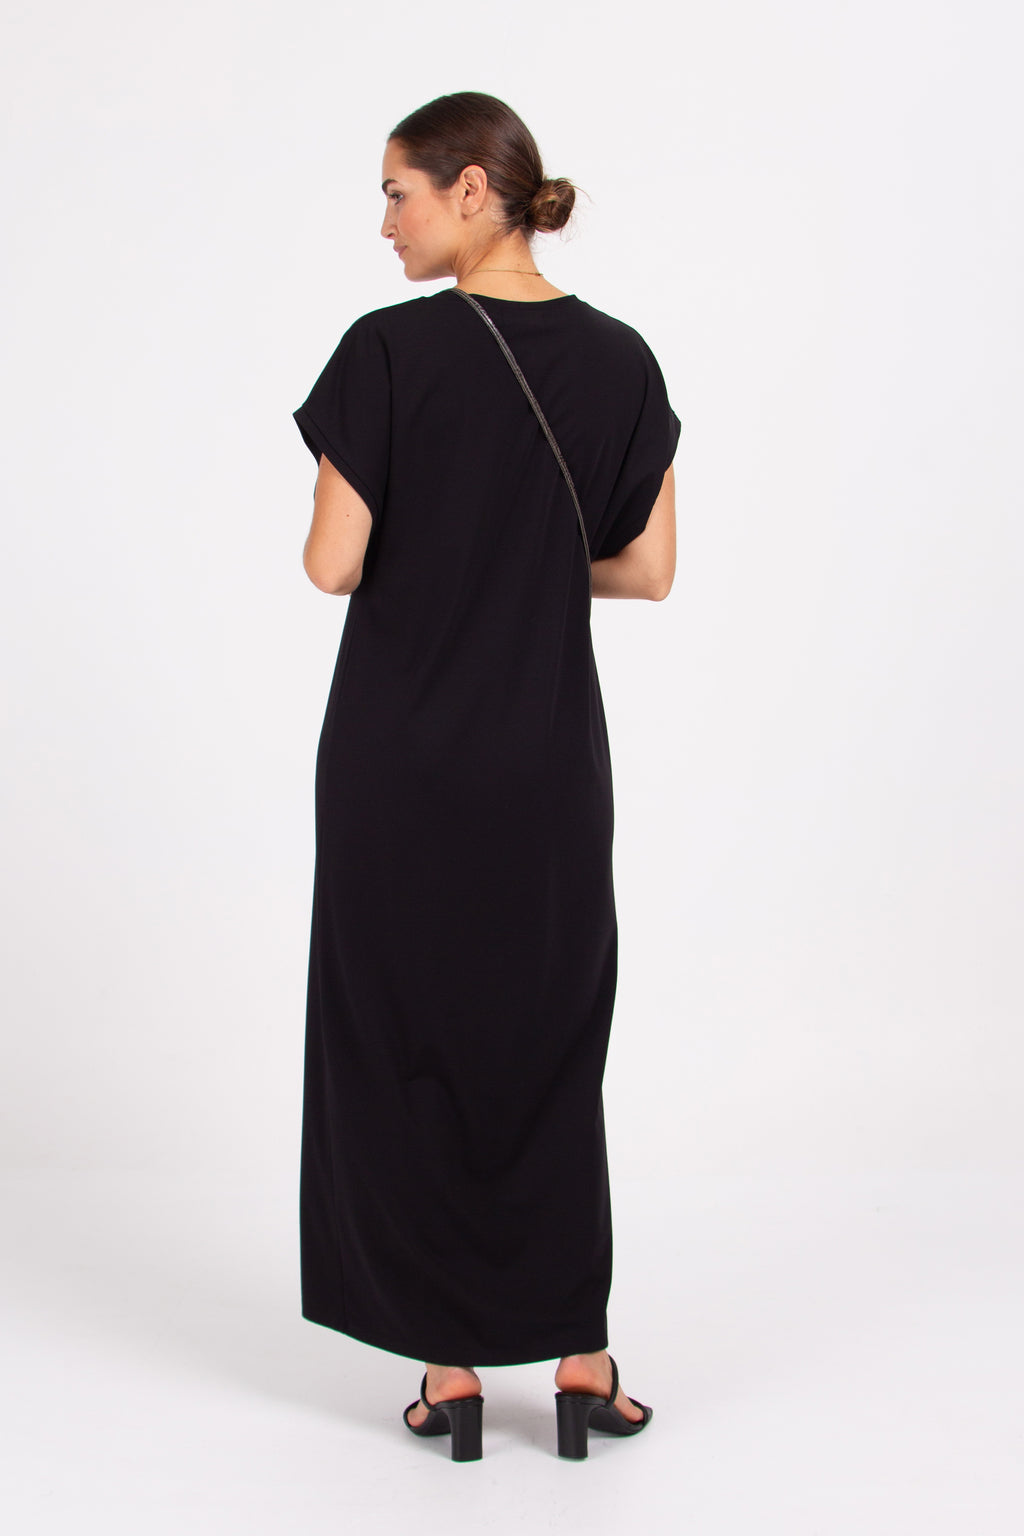 Denise zwarte lange jersey jurk